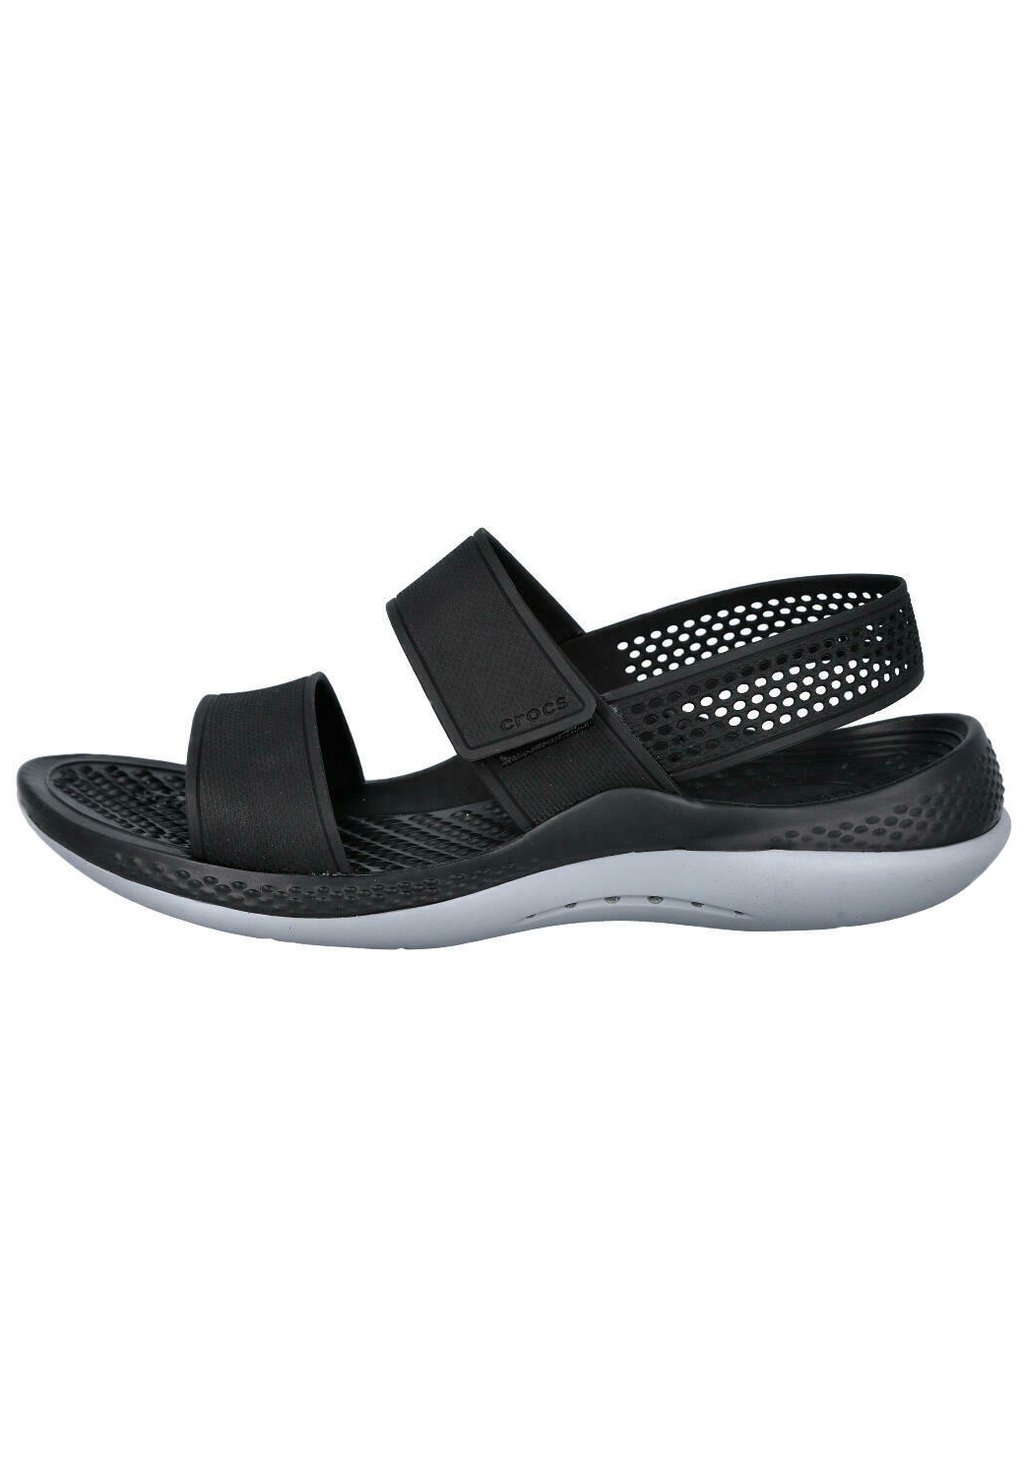 Сандалии LITERIDE Crocs, черный сандалии crocs literide stretch sandal цвет neo mint almost white